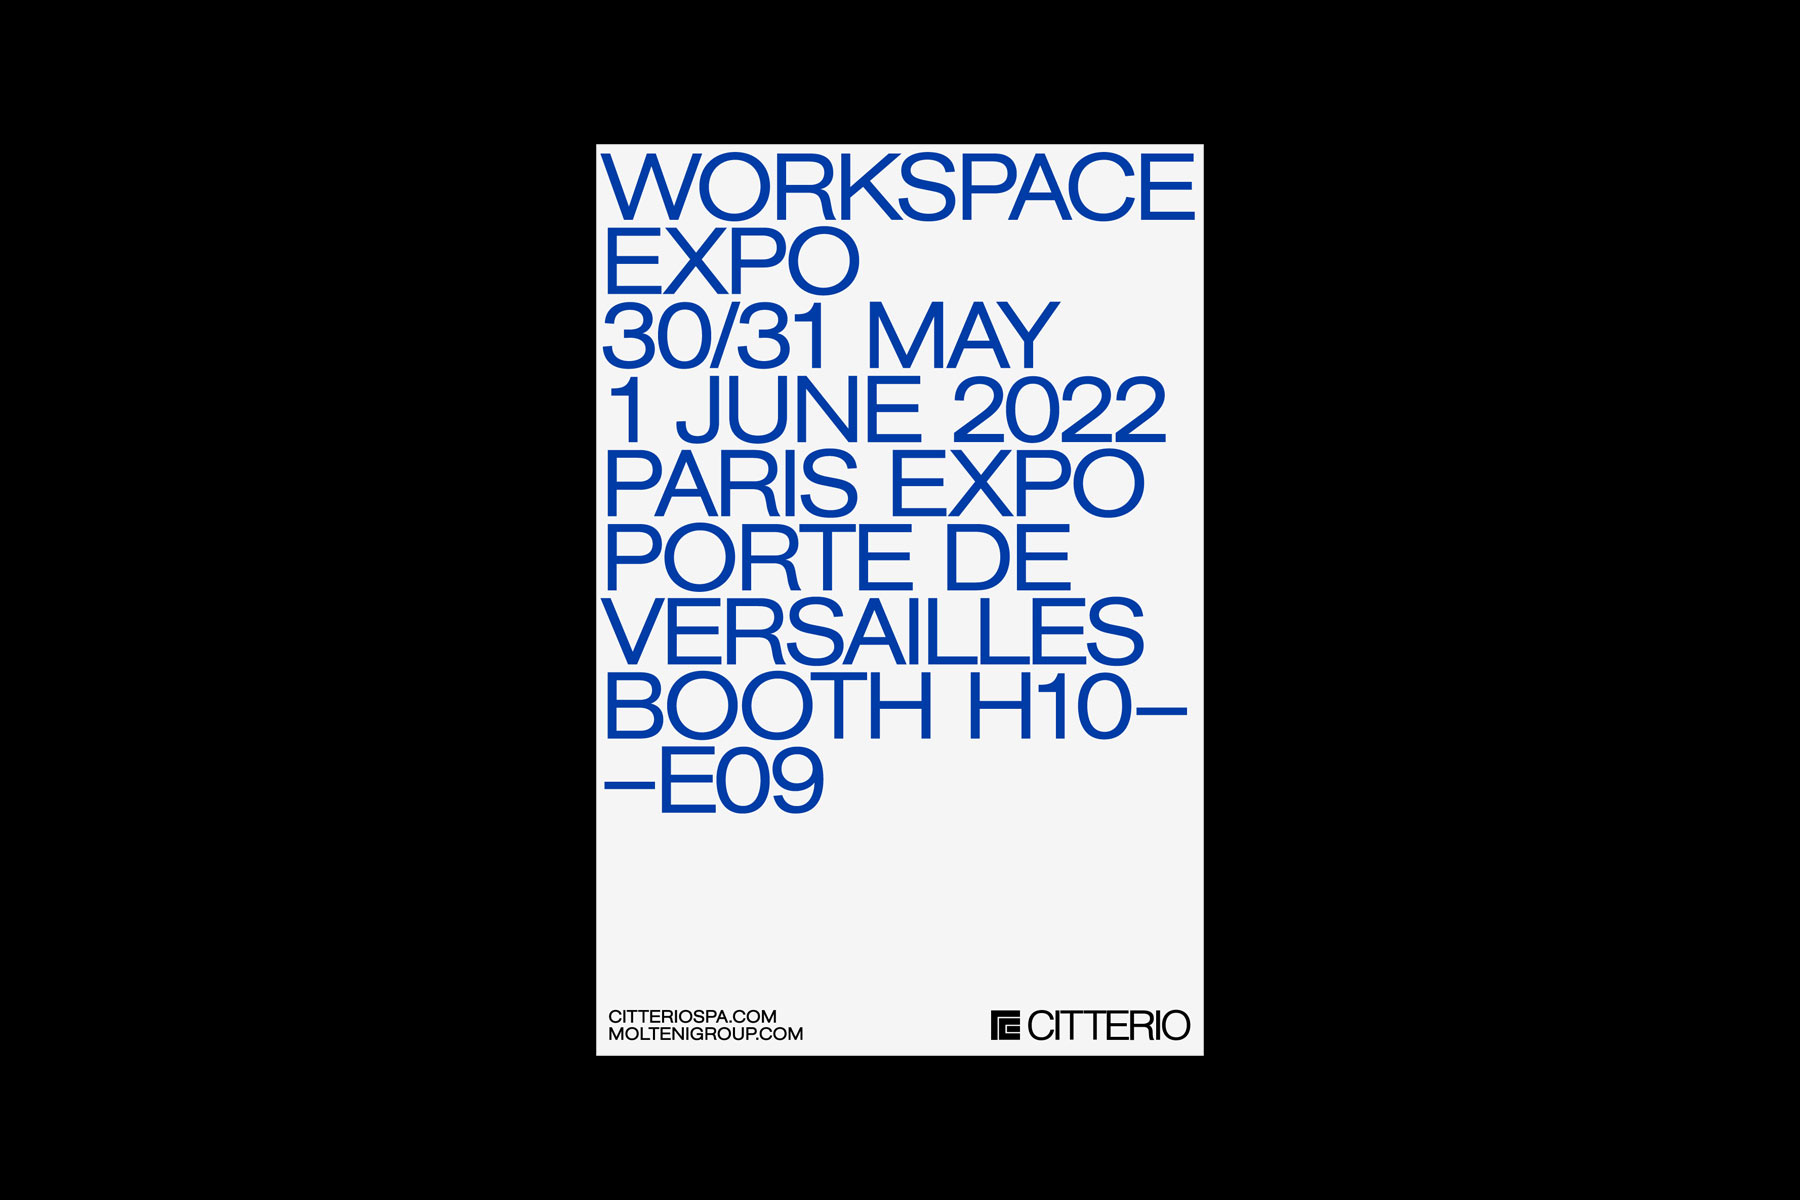 citterio workspace expo 2022